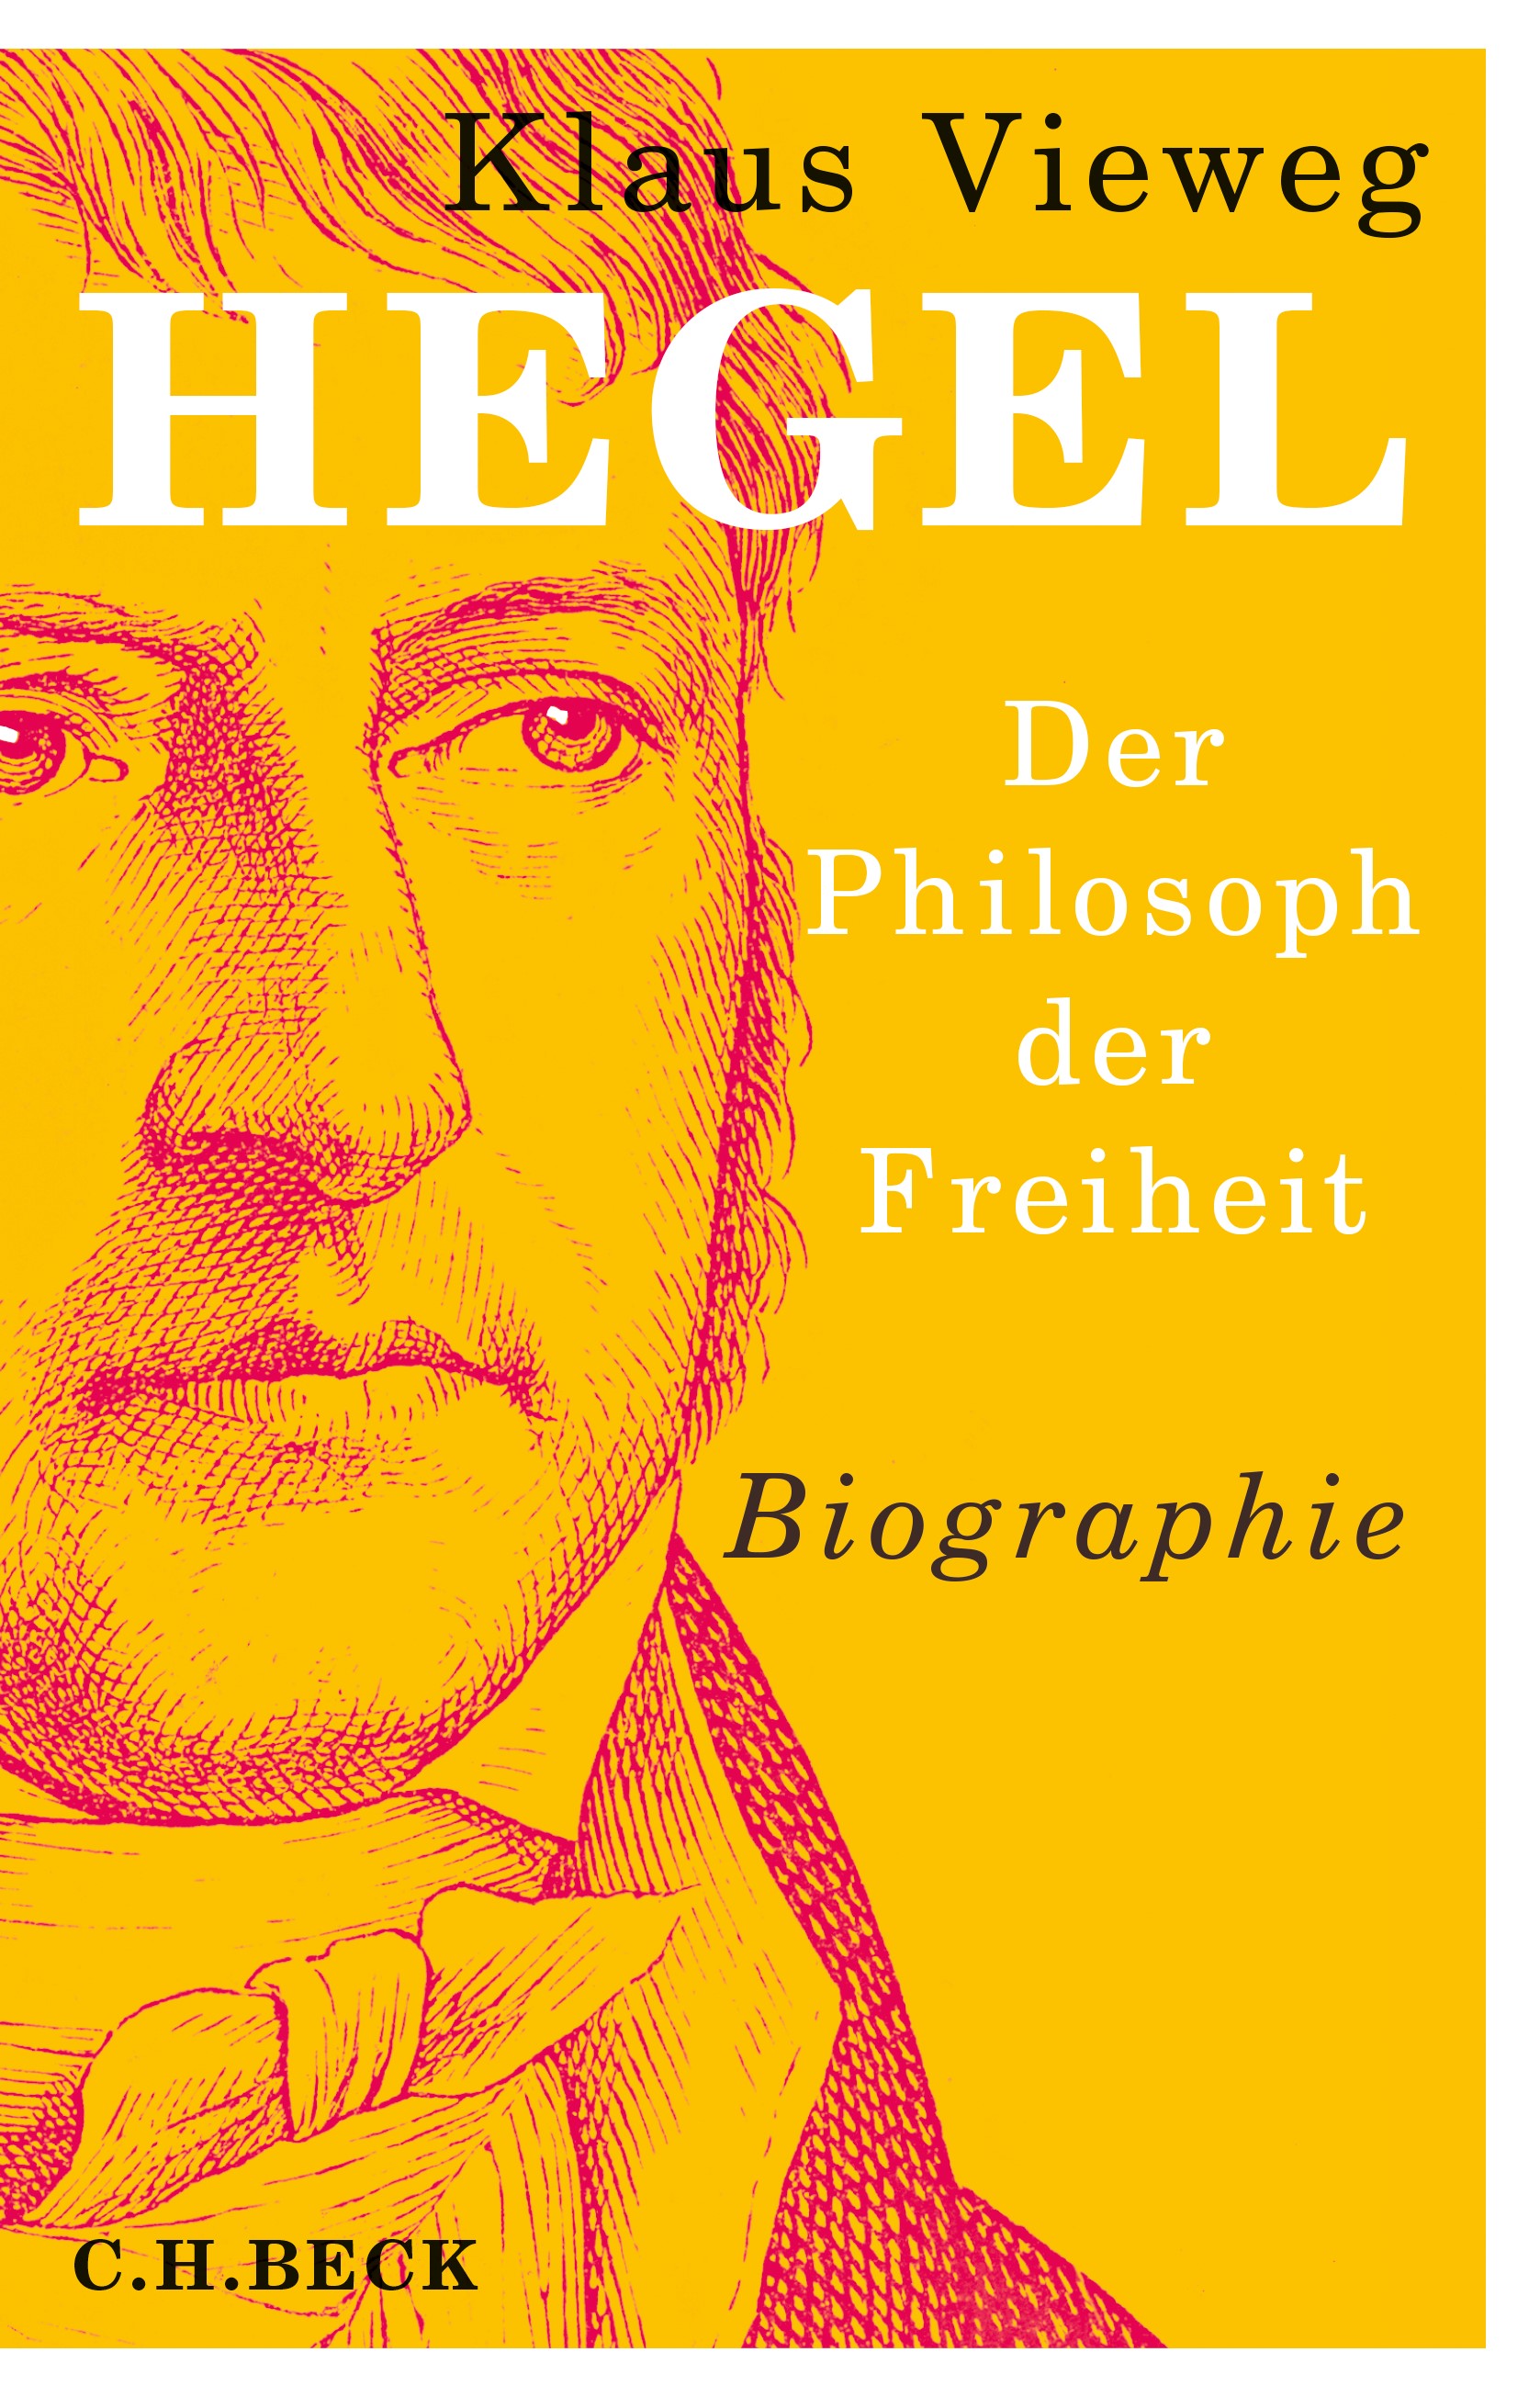 Cover: Vieweg, Klaus, Hegel